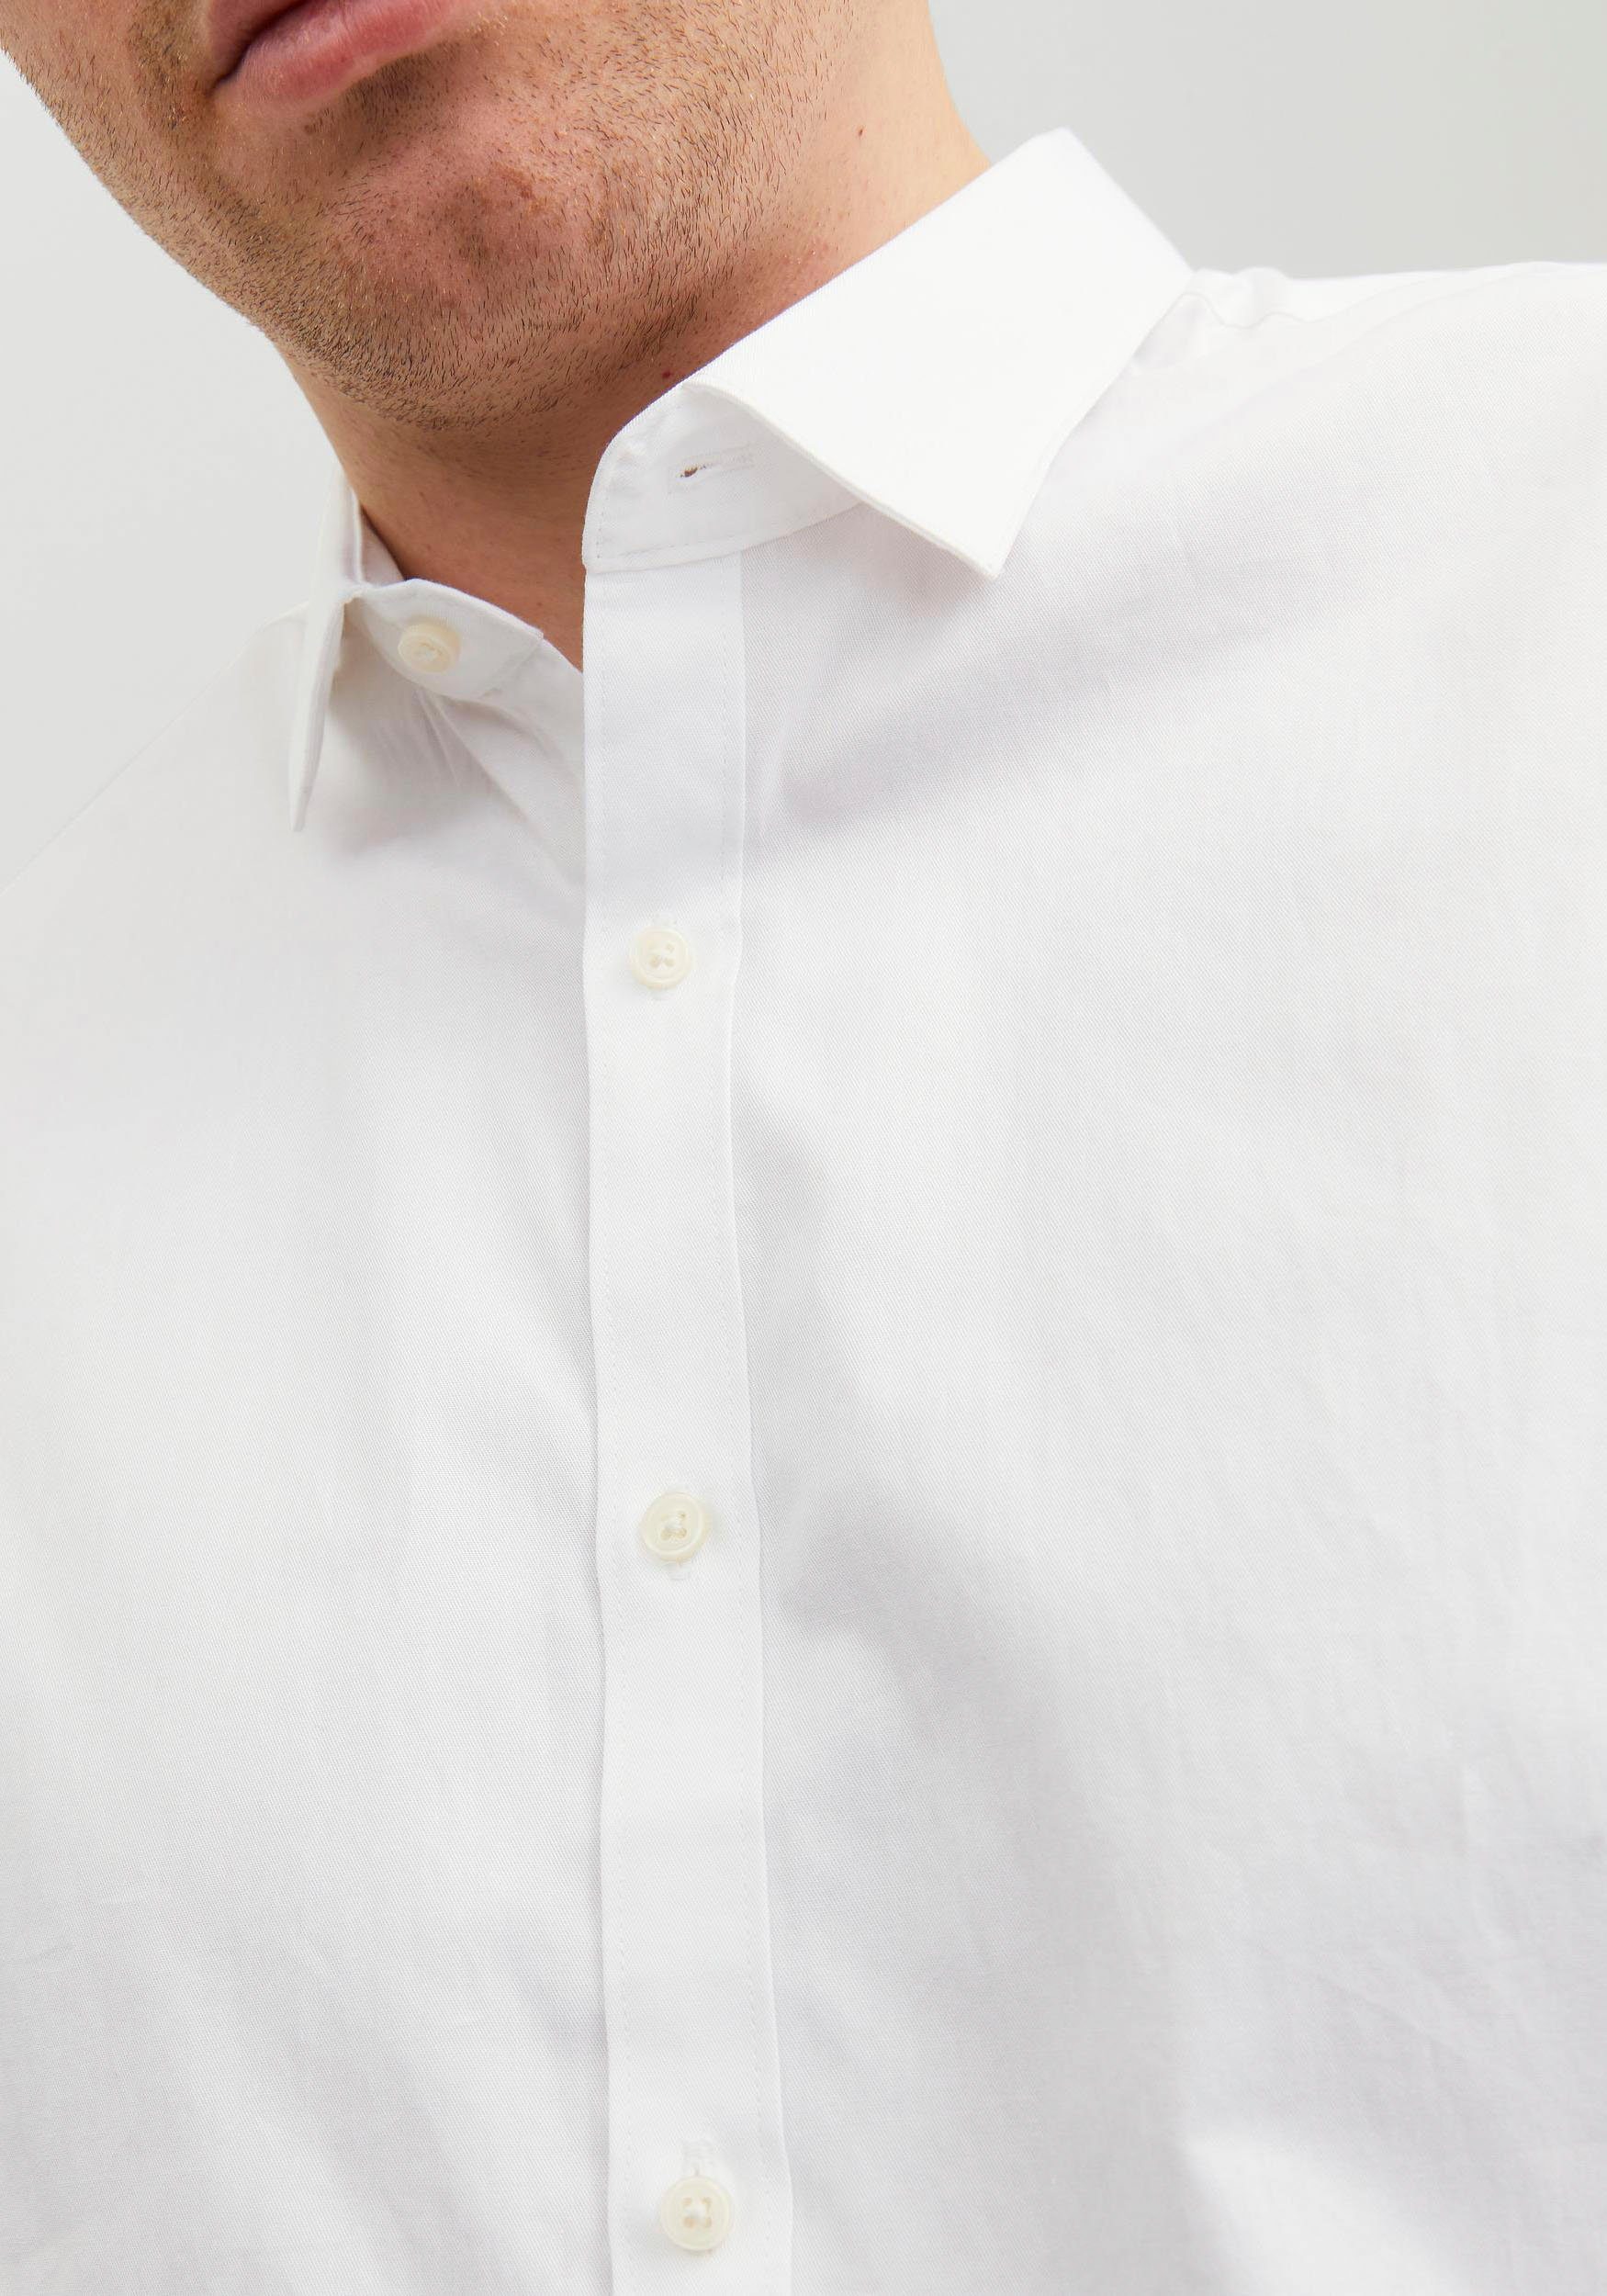 Jack & Jones PlusSize SHIRT JPRBLACARDIFF white Langarmhemd